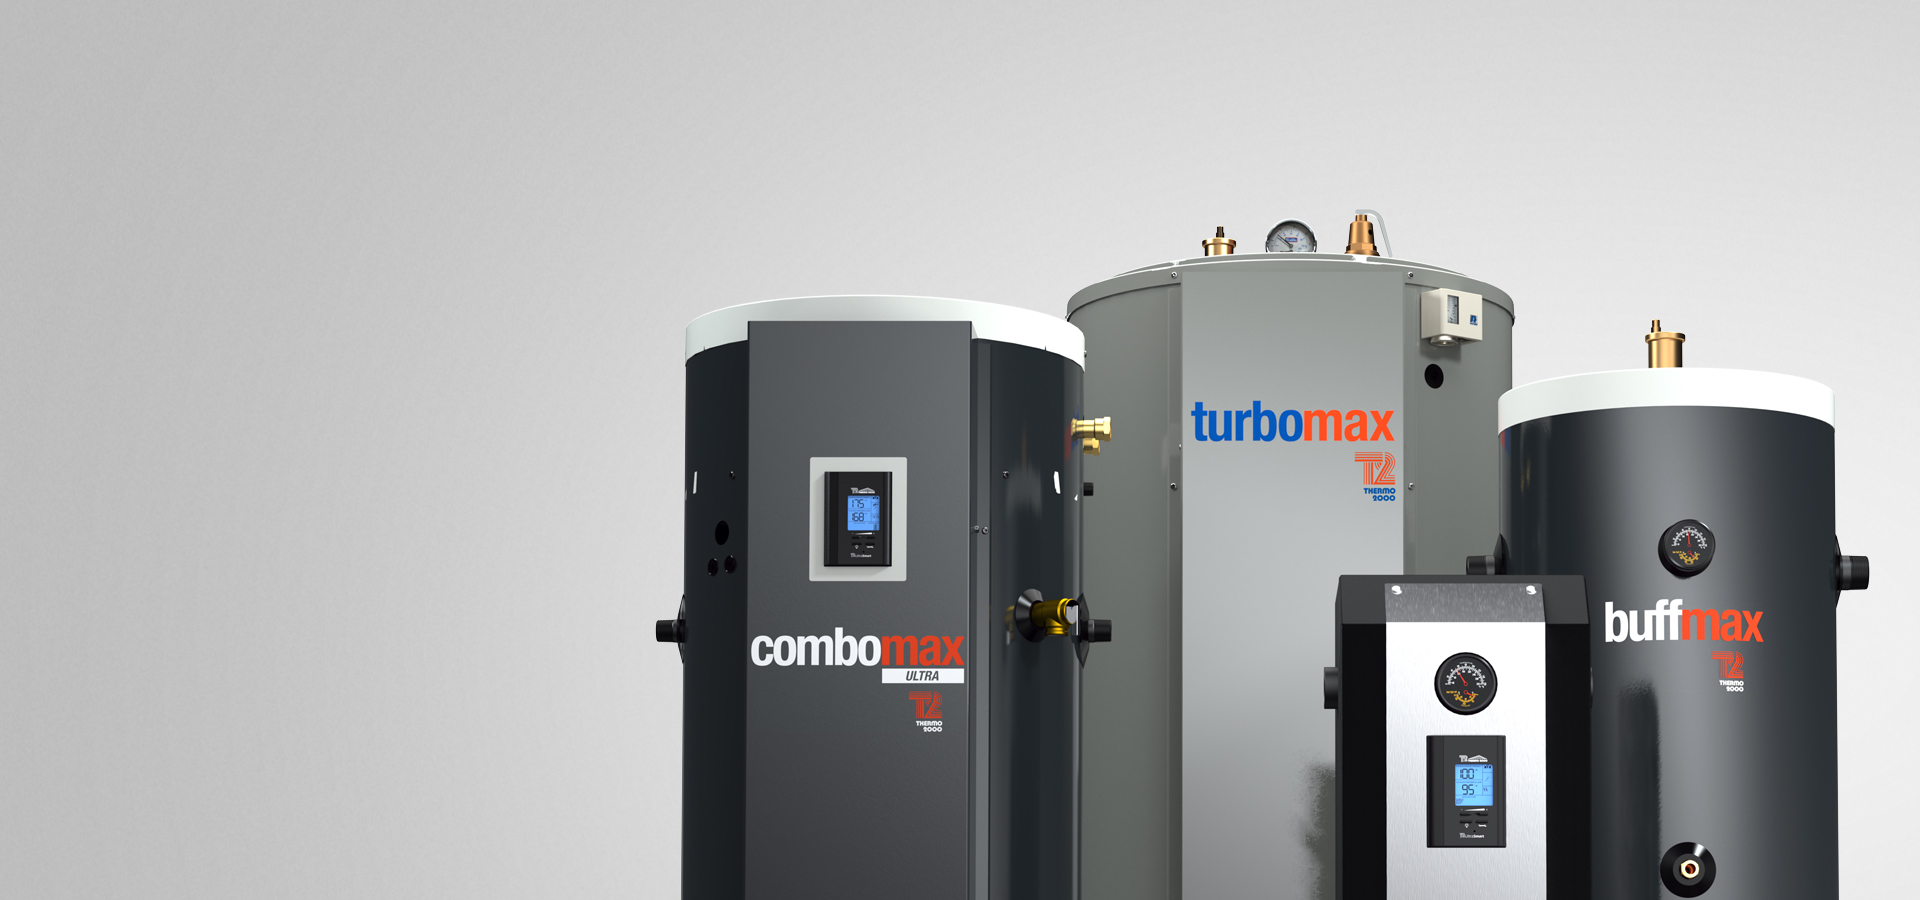 ComboMax ULTRA, TurboMax indirect water heater, BuffMax buffer tank & bth ULTRA electric boiler